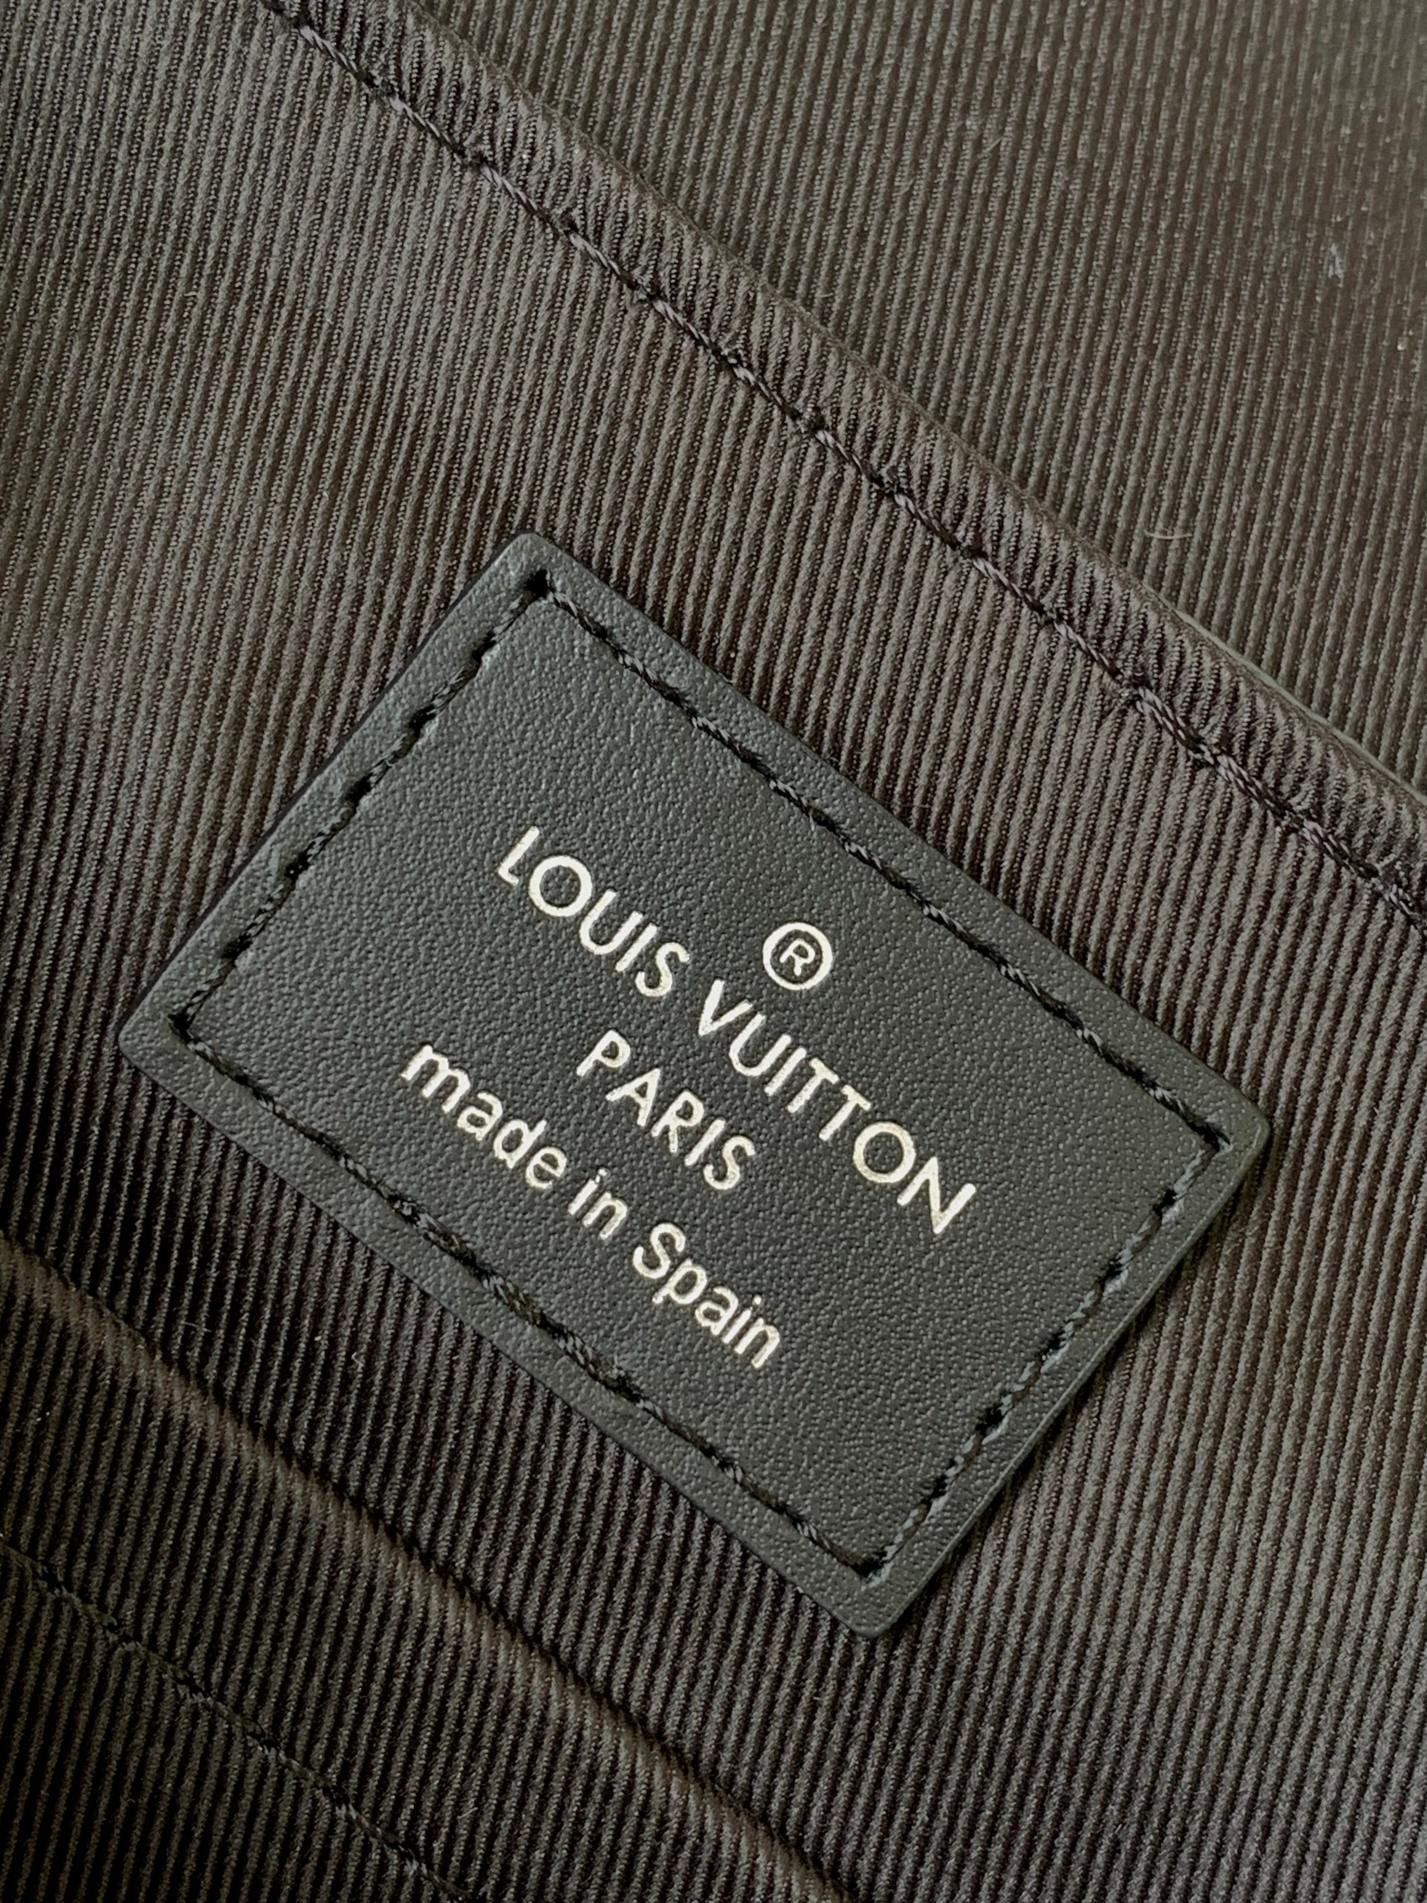 Replica Louis Vuitton DISTRICT PM LV M46255 for Sale